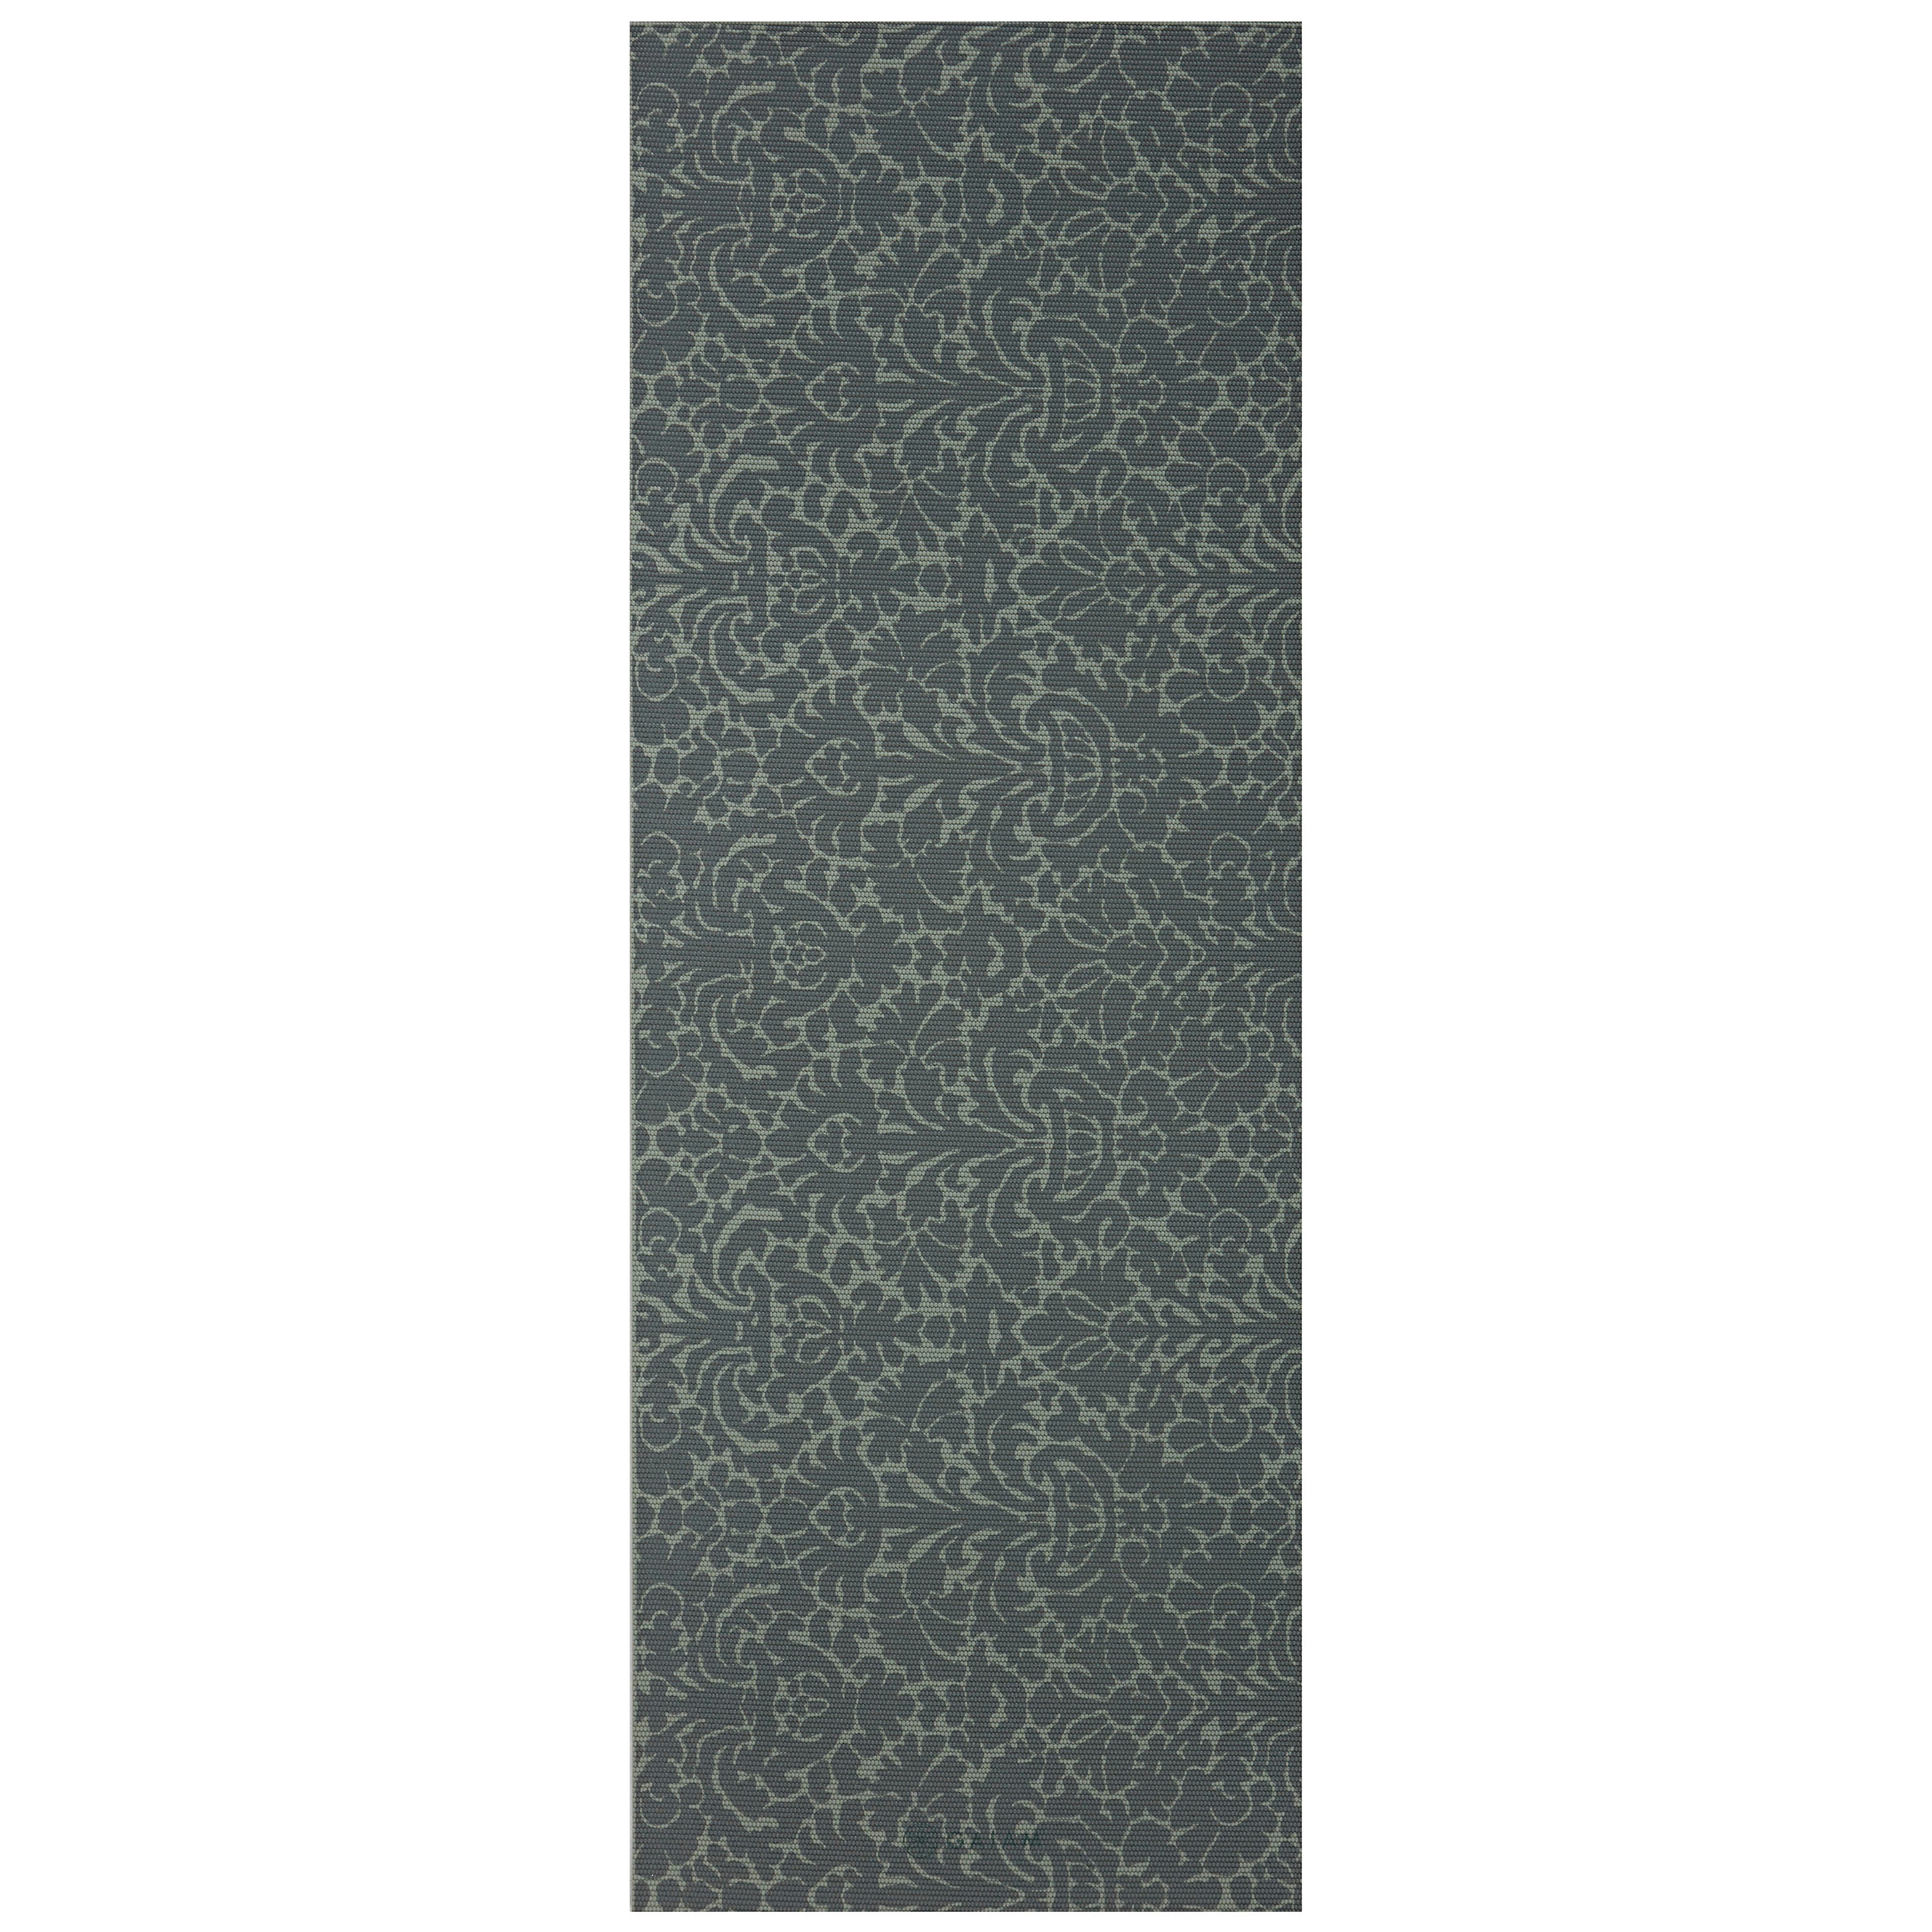 Premium Reversible Yoga Mat - Perpetual Blossom (6mm) reverse flat